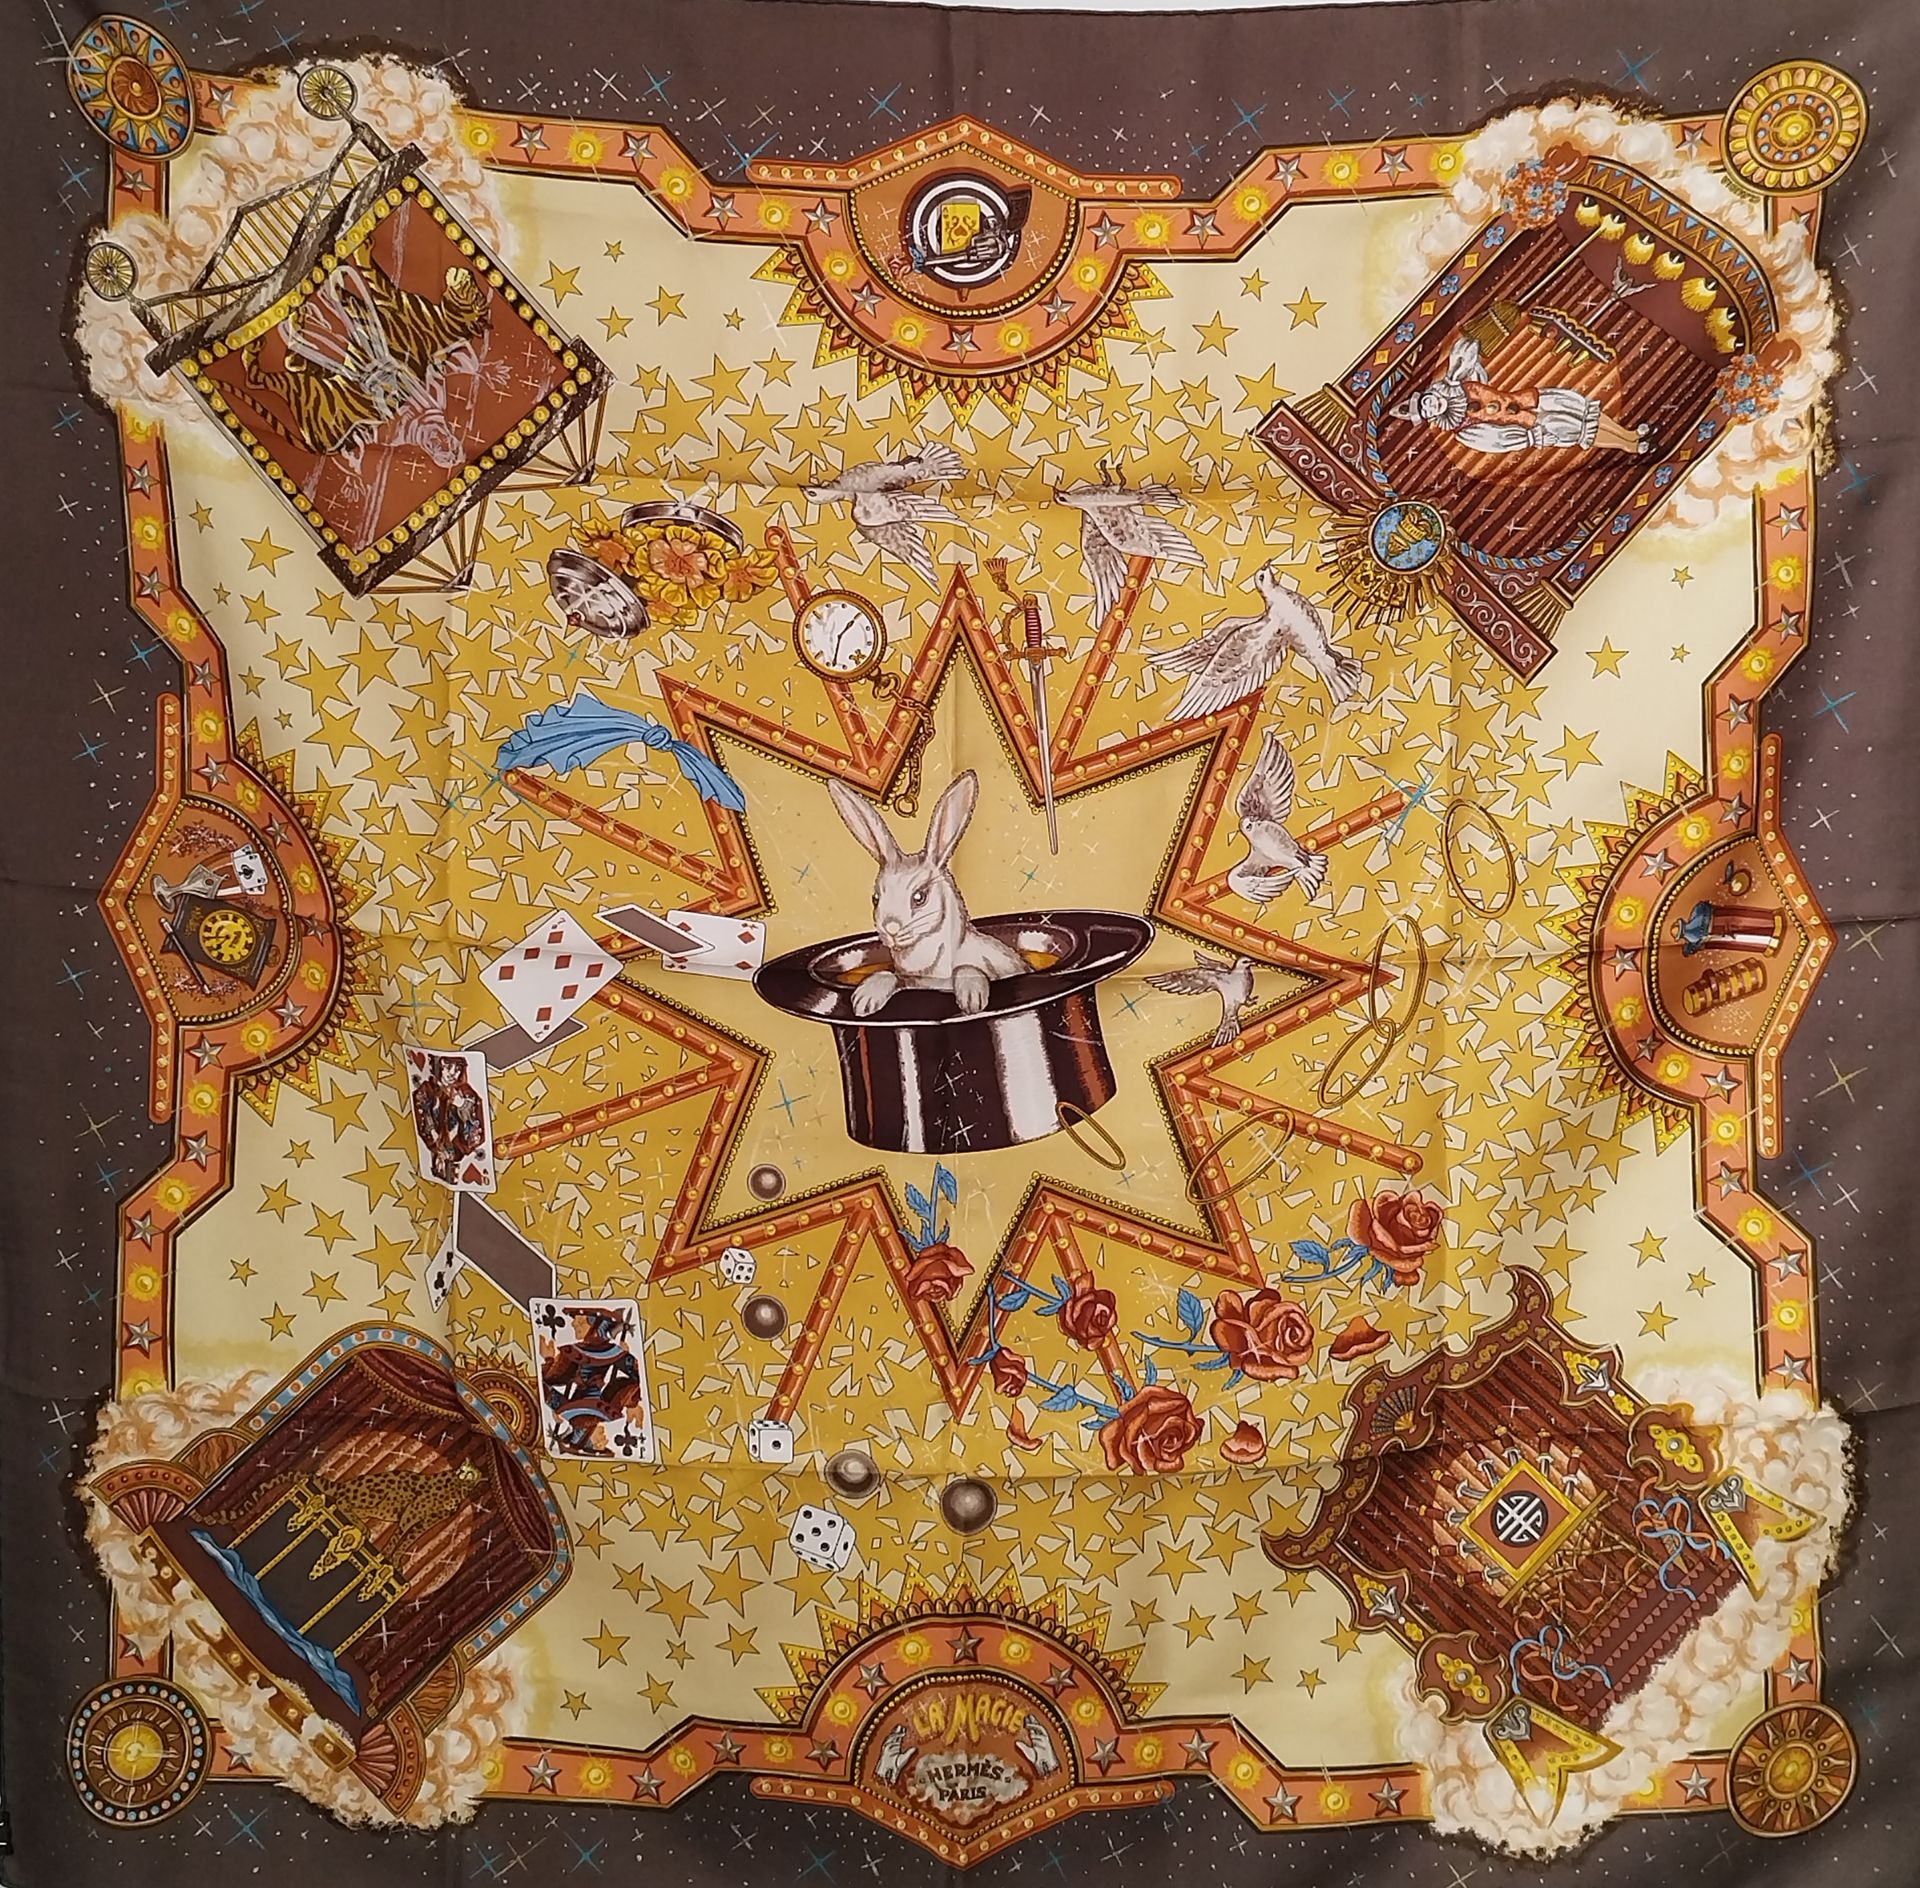 Null 赫米斯

"魔力

棕色丝质斜纹布方块，由克劳迪娅设计

装在爱马仕的袋子里